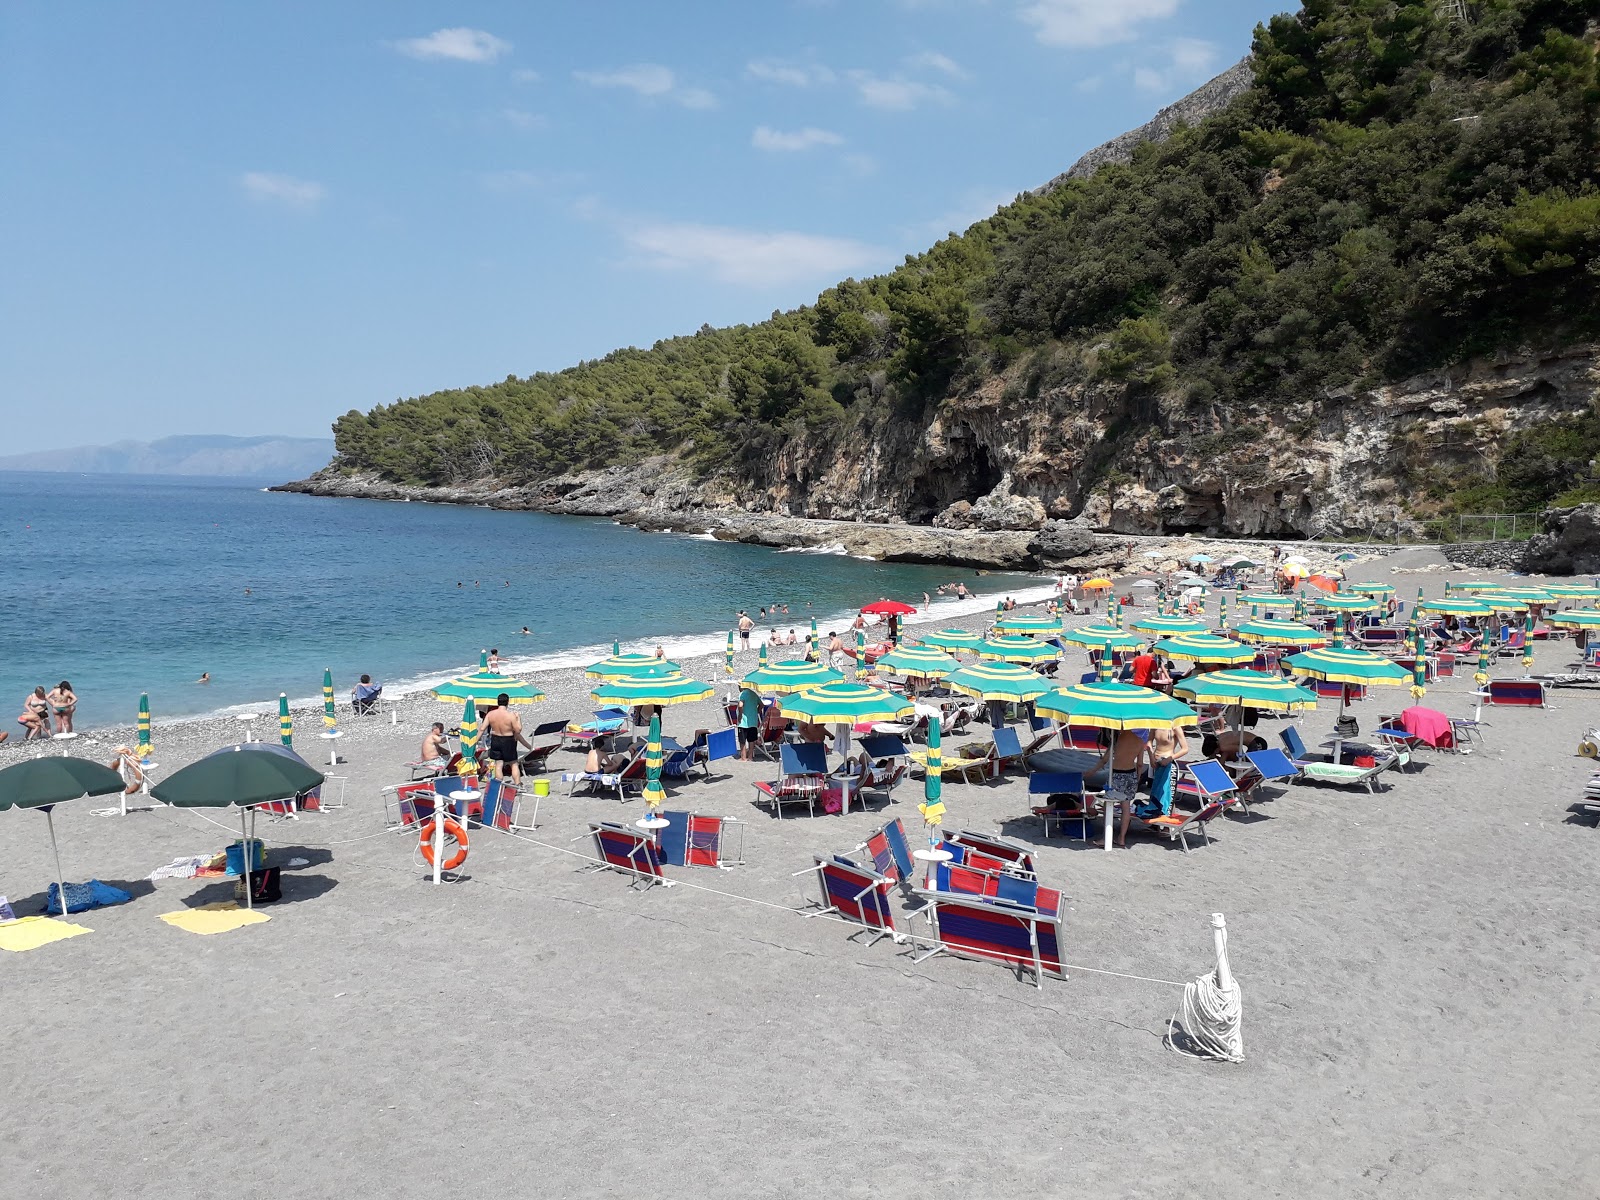 Foto de Spiaggia di Fiumicello ubicado en área natural